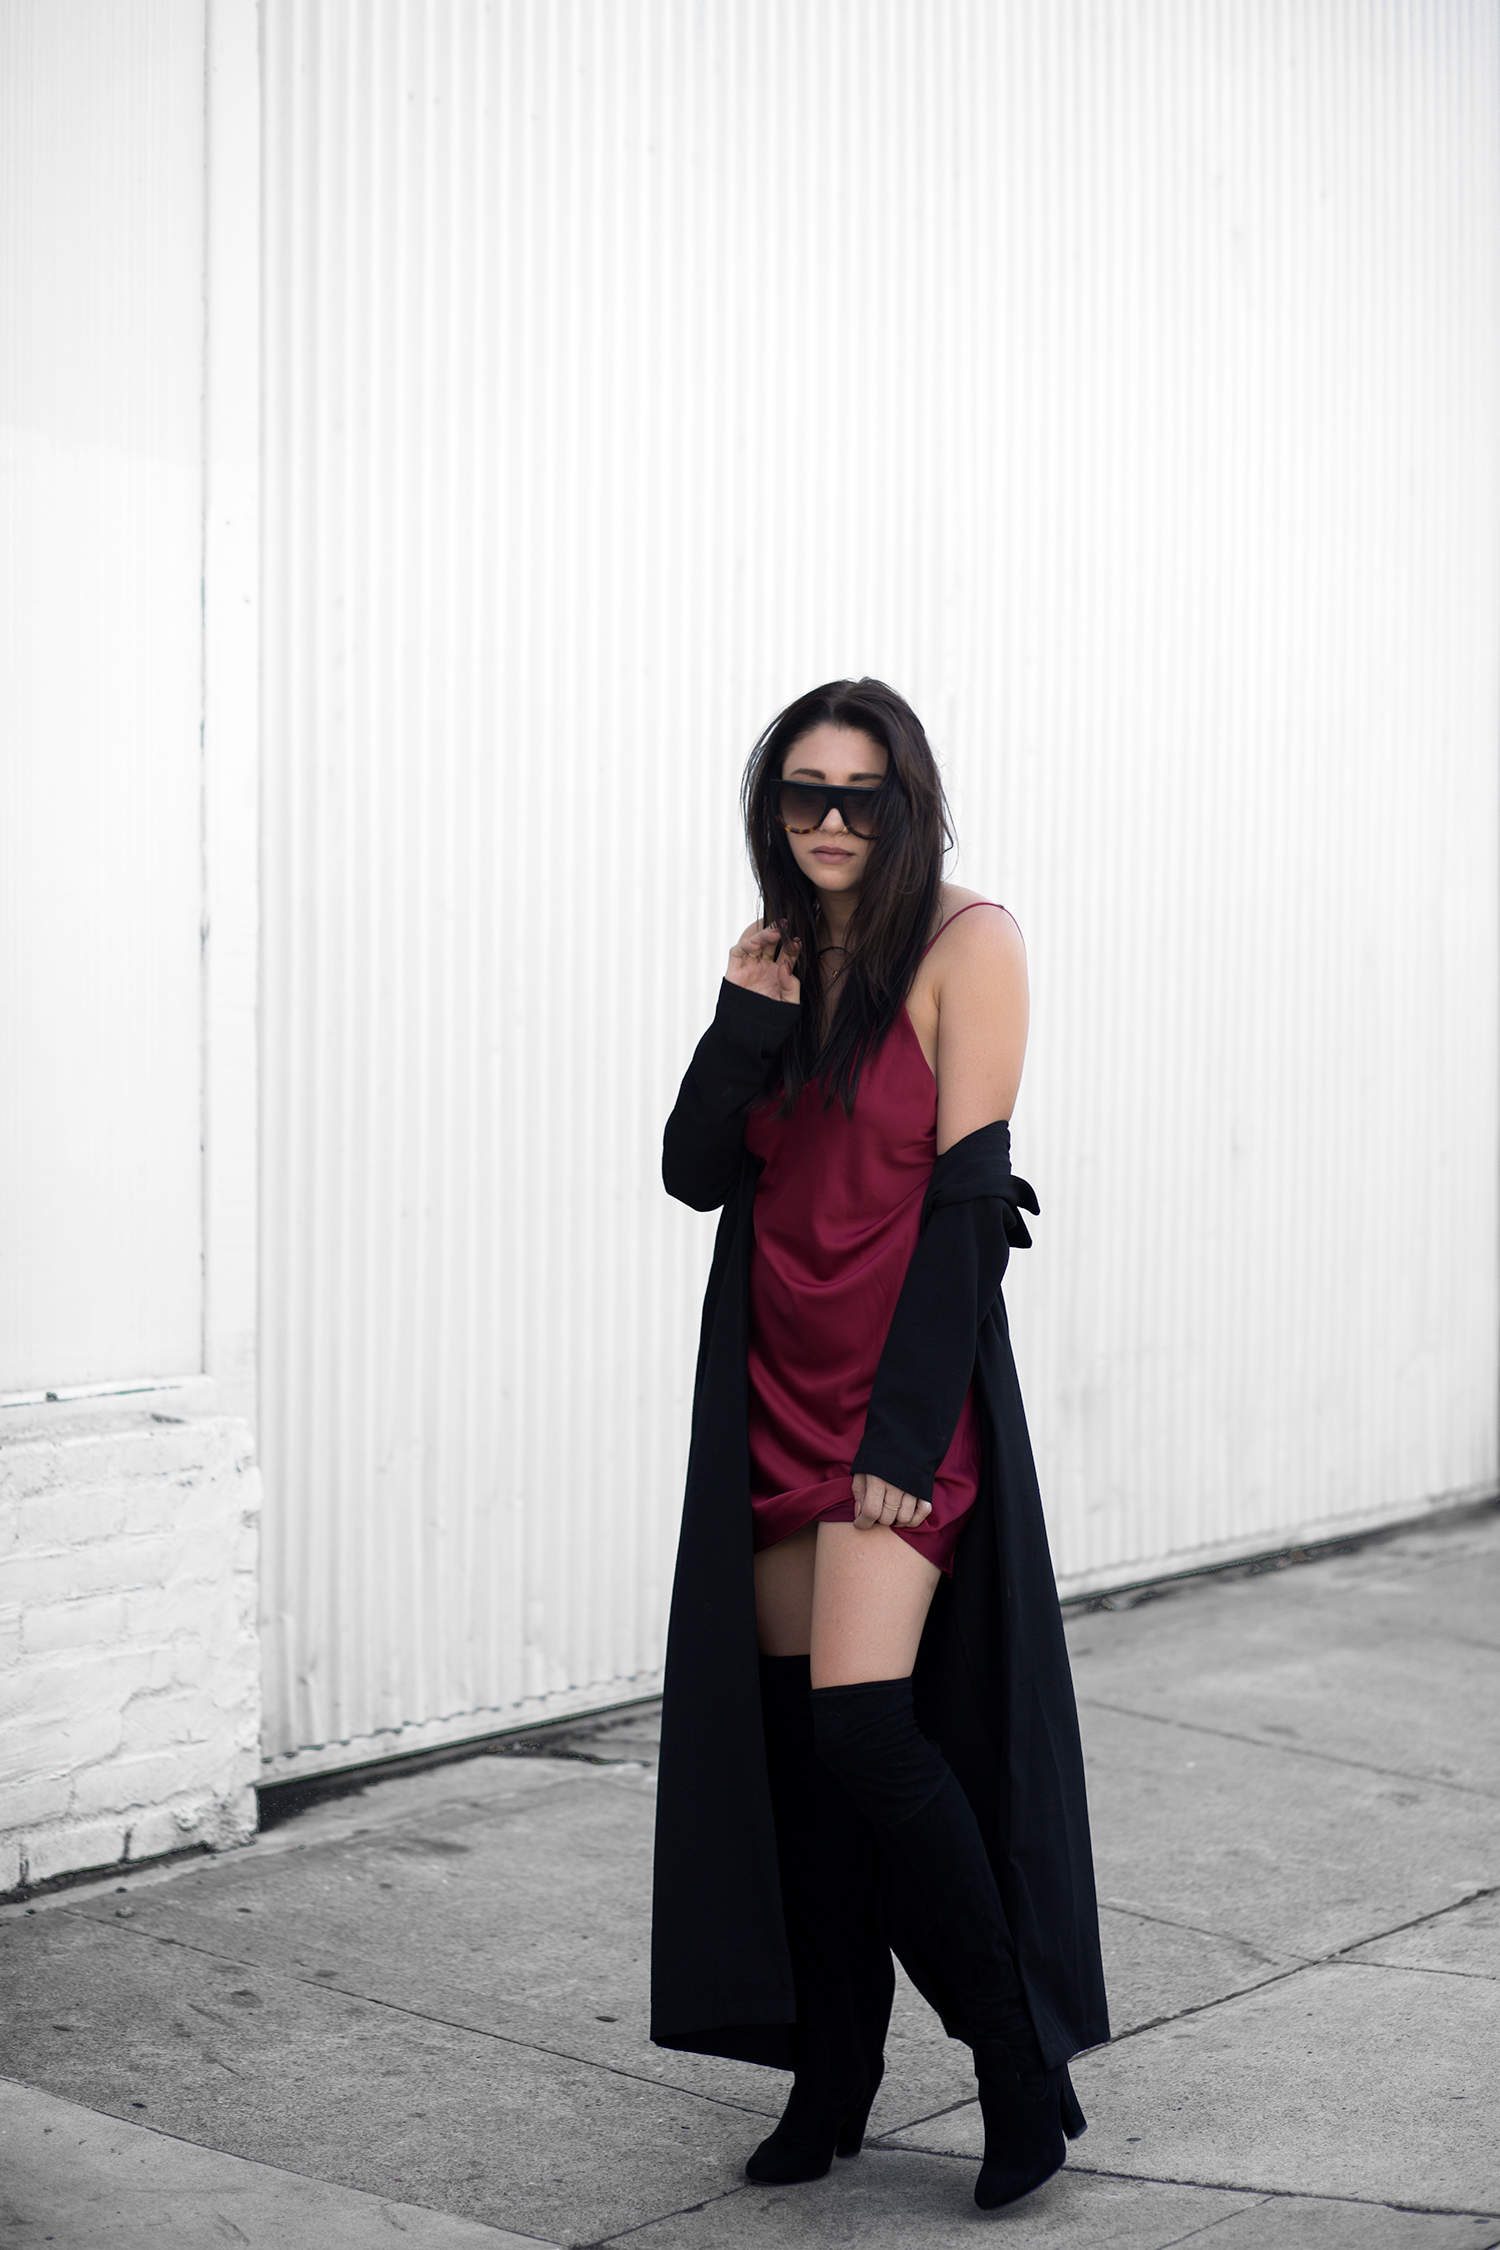 OOTD - Short Skirt and A Long Jacket | La Petite Noob | A Toronto-Based  Fashion and Lifestyle Blog.